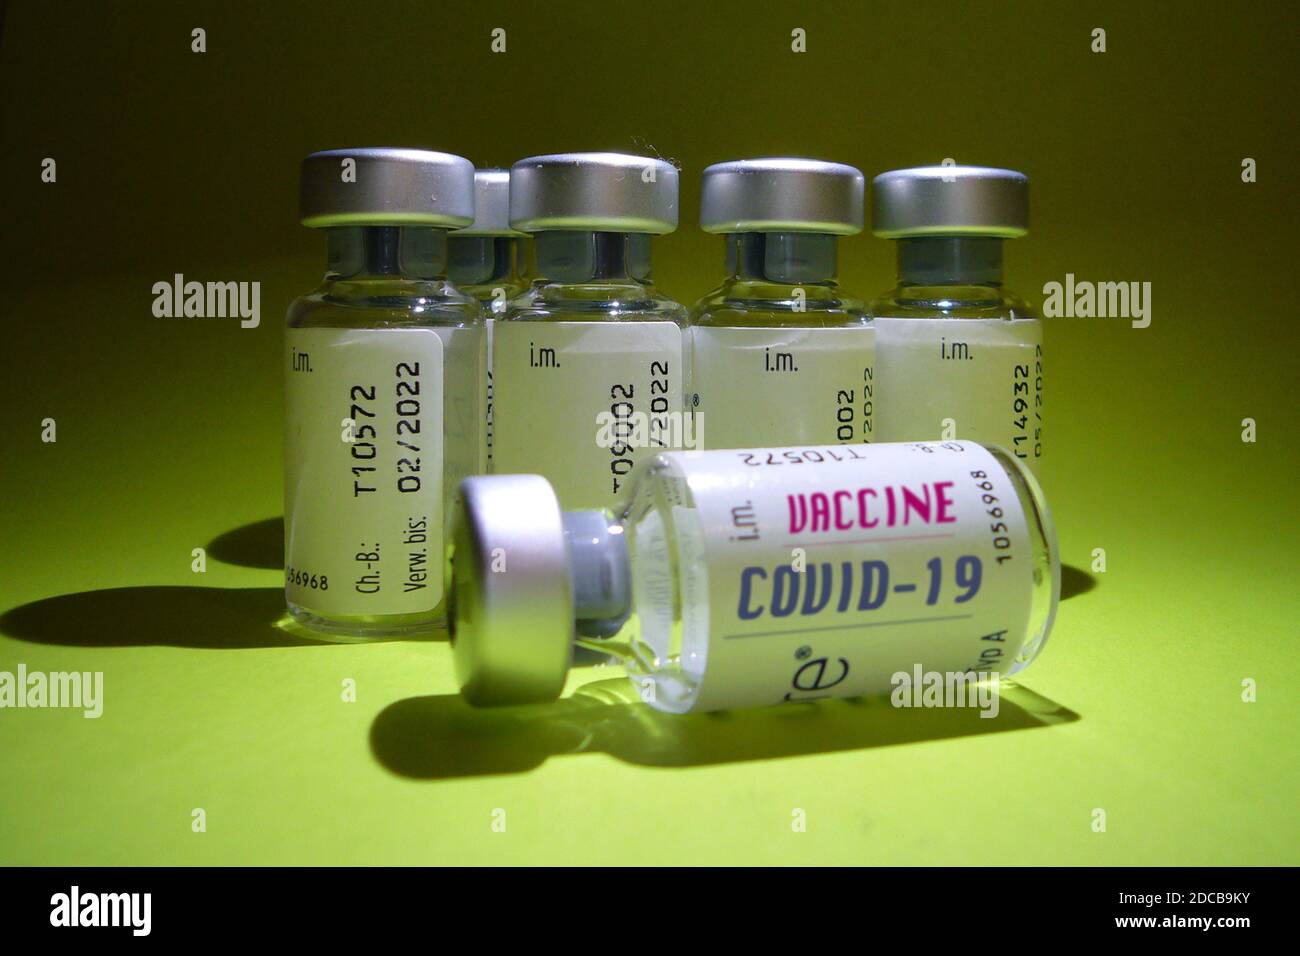 Hair, Deutschland. November 2020. Themenbild, Symbolfoto: Corona-Impfstoff. Impfdosen, Impfdose, weltweit Credit: dpa/Alamy Live News Stockfoto